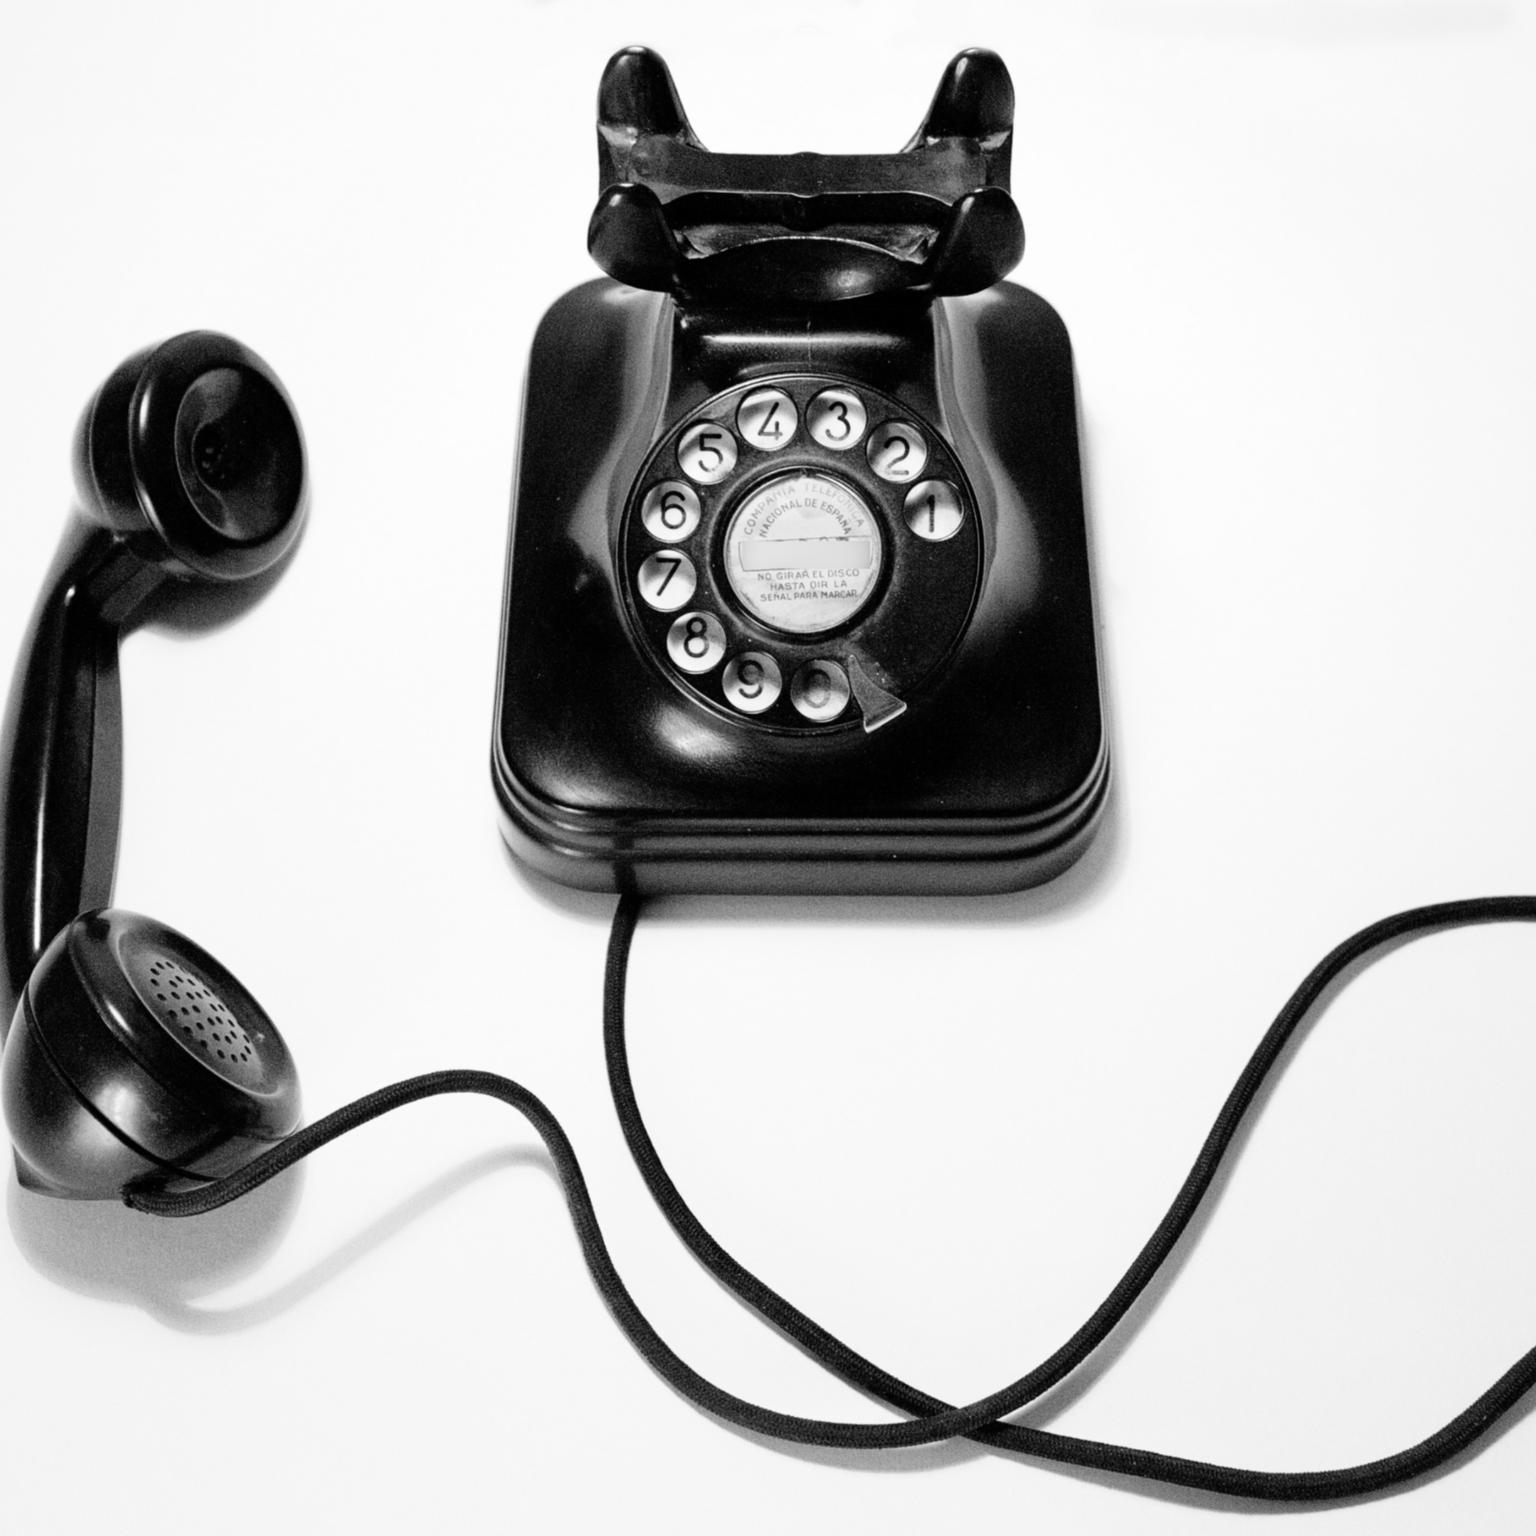 Telefon (c) www.pixabay.com